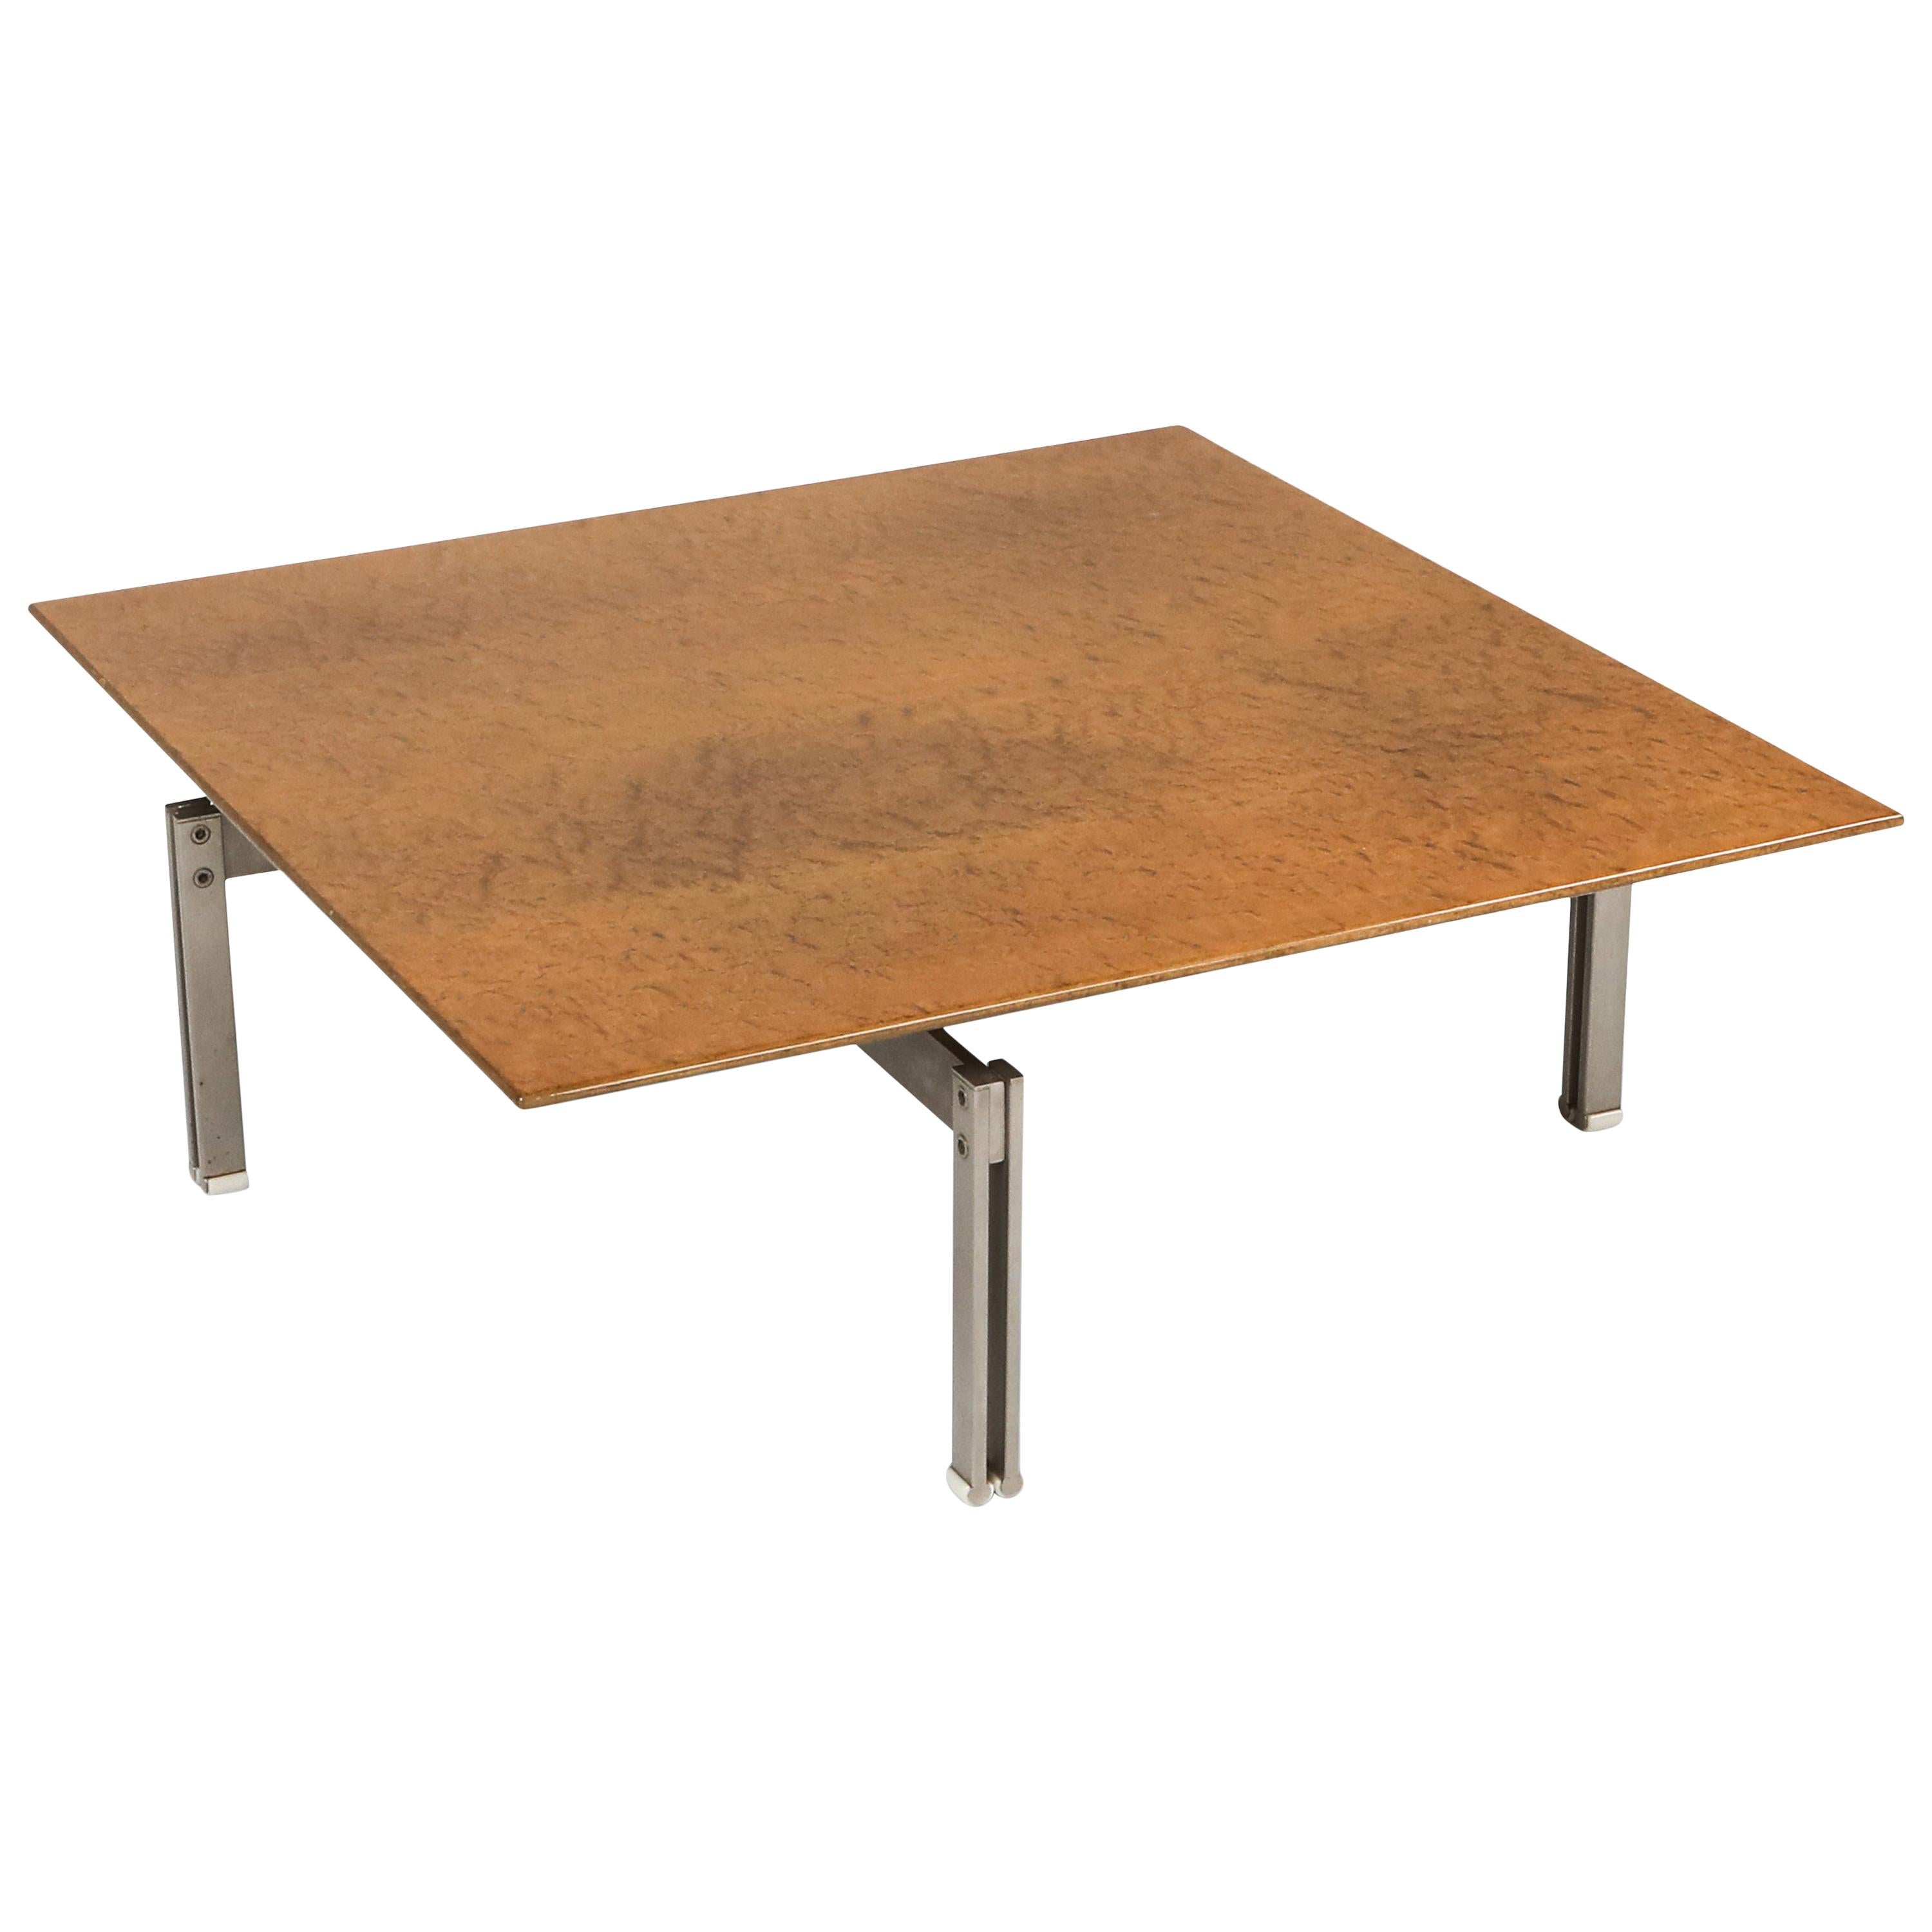 Milo Baughman Style Burl Wood Coffee Table with Steel Base